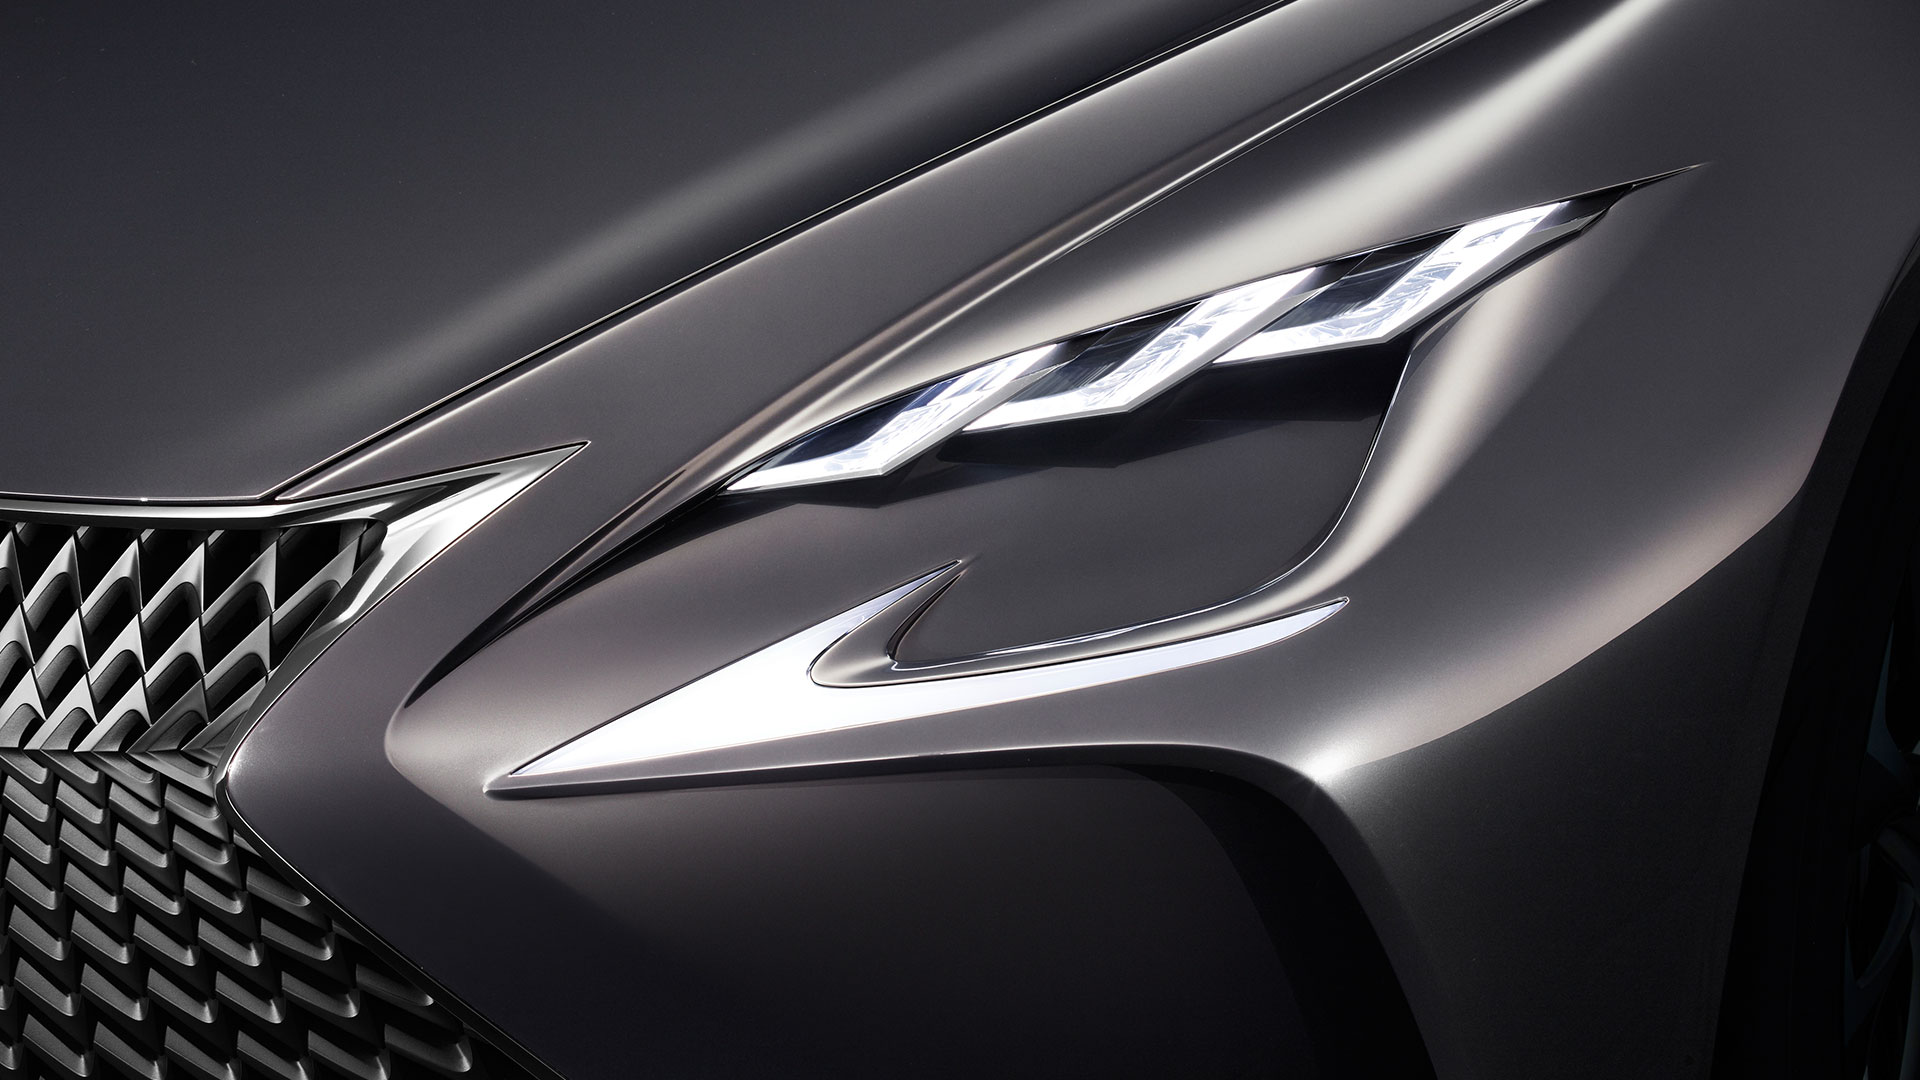 Headlight close up of the Lexus LF-FC Hydrogen Fuel-cell Sedan concept car 